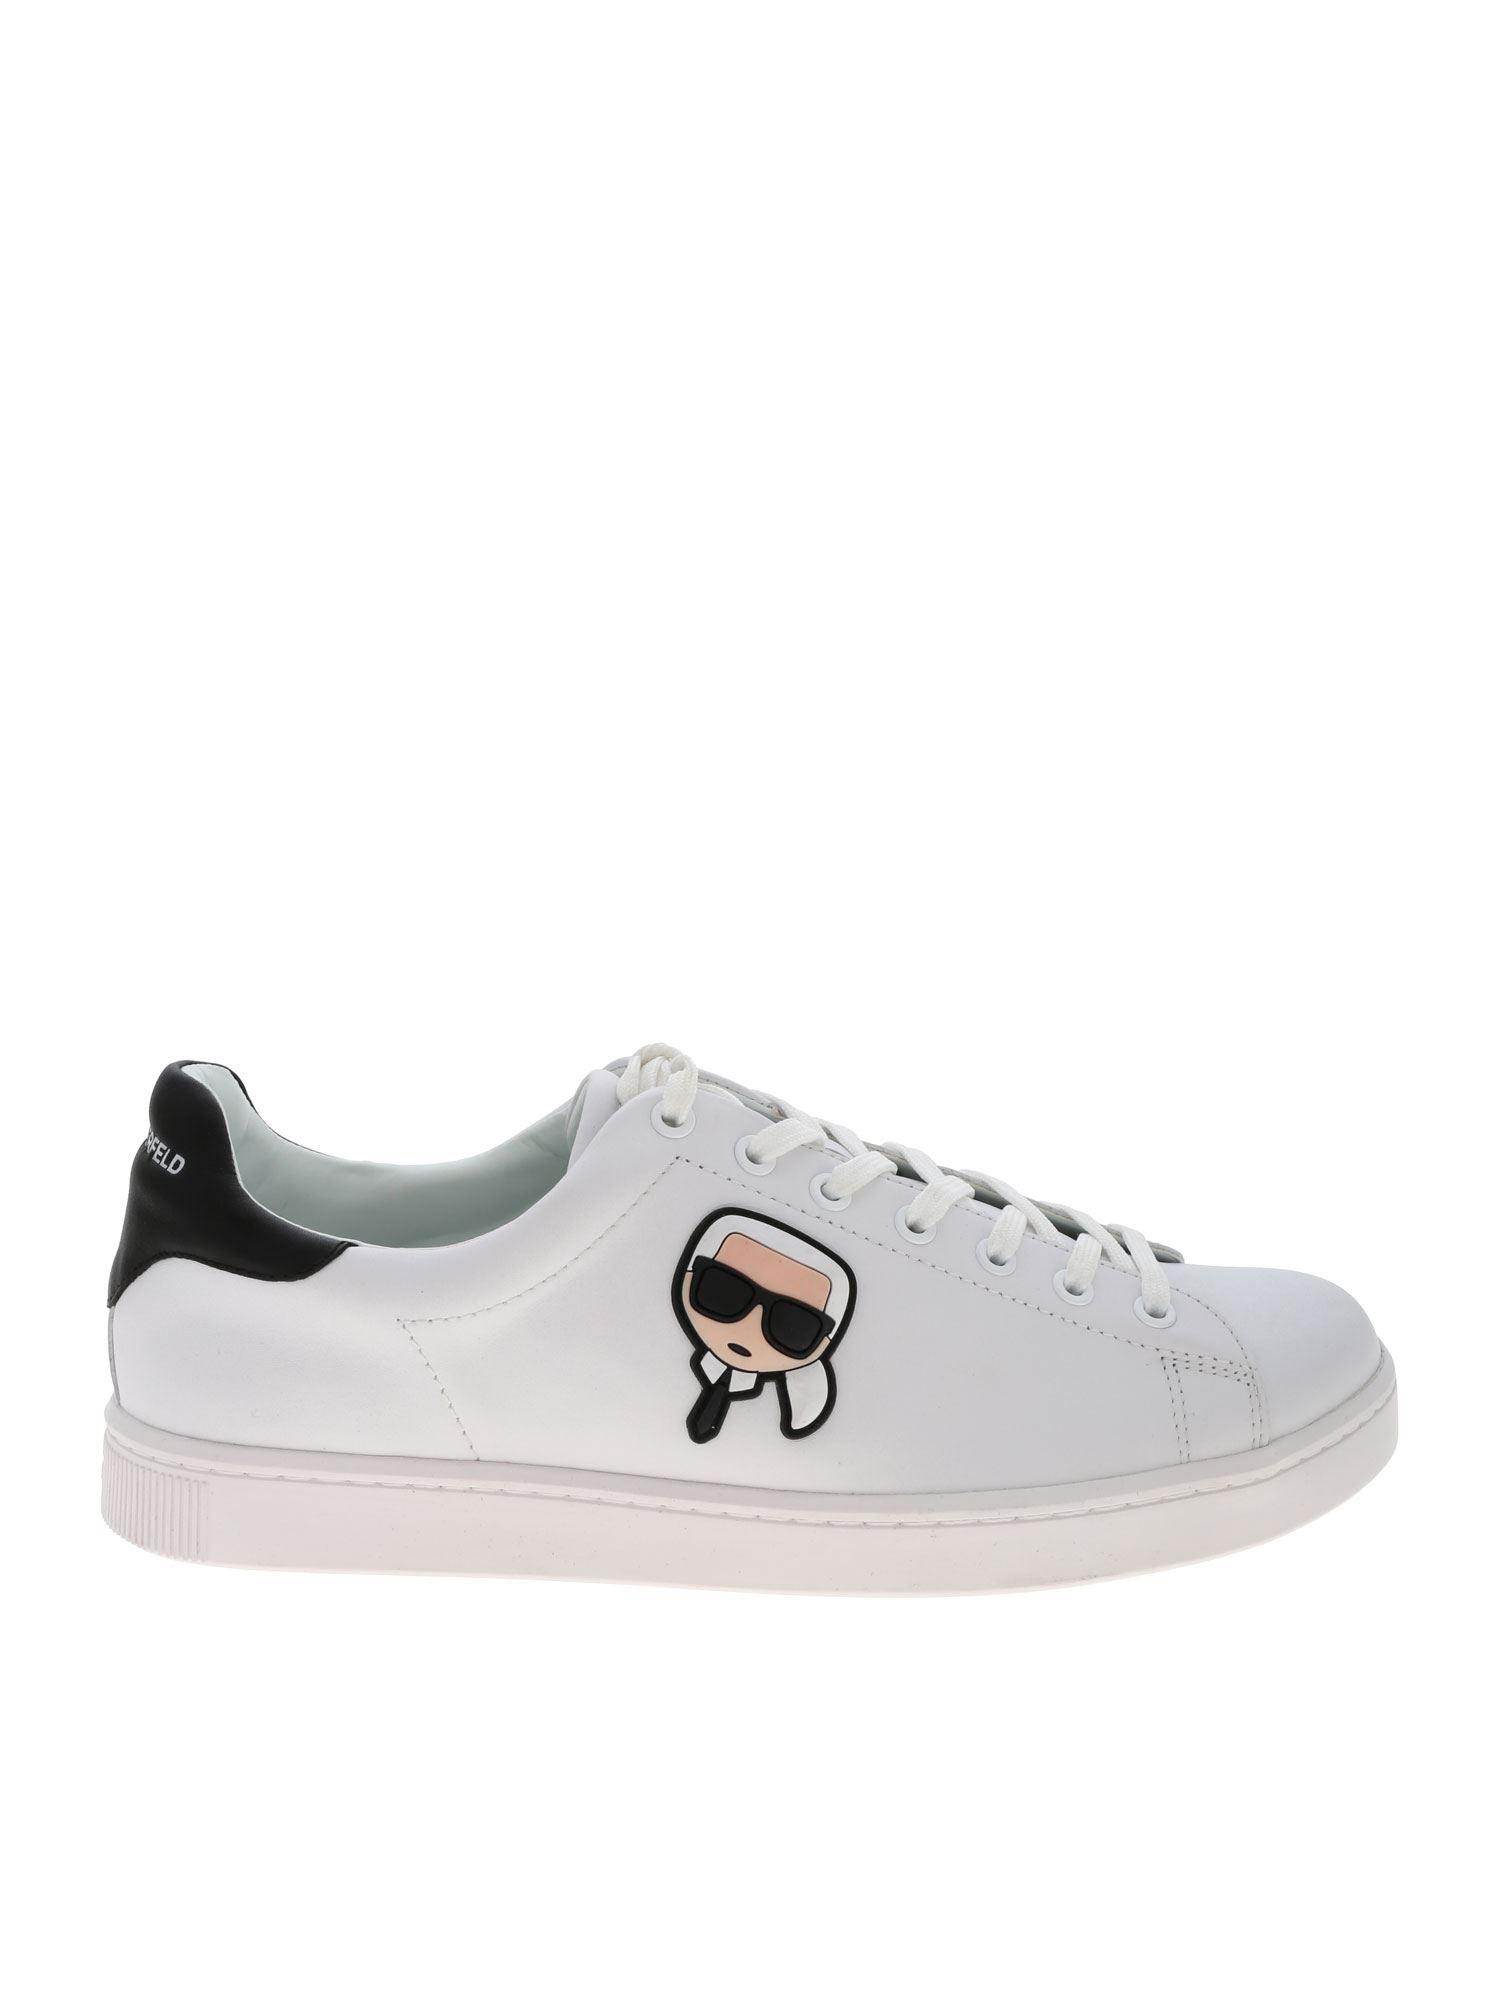 Karl Lagerfeld Lace Kapri Mens Karl Ikonik 3d Sneakers in White/Black ...